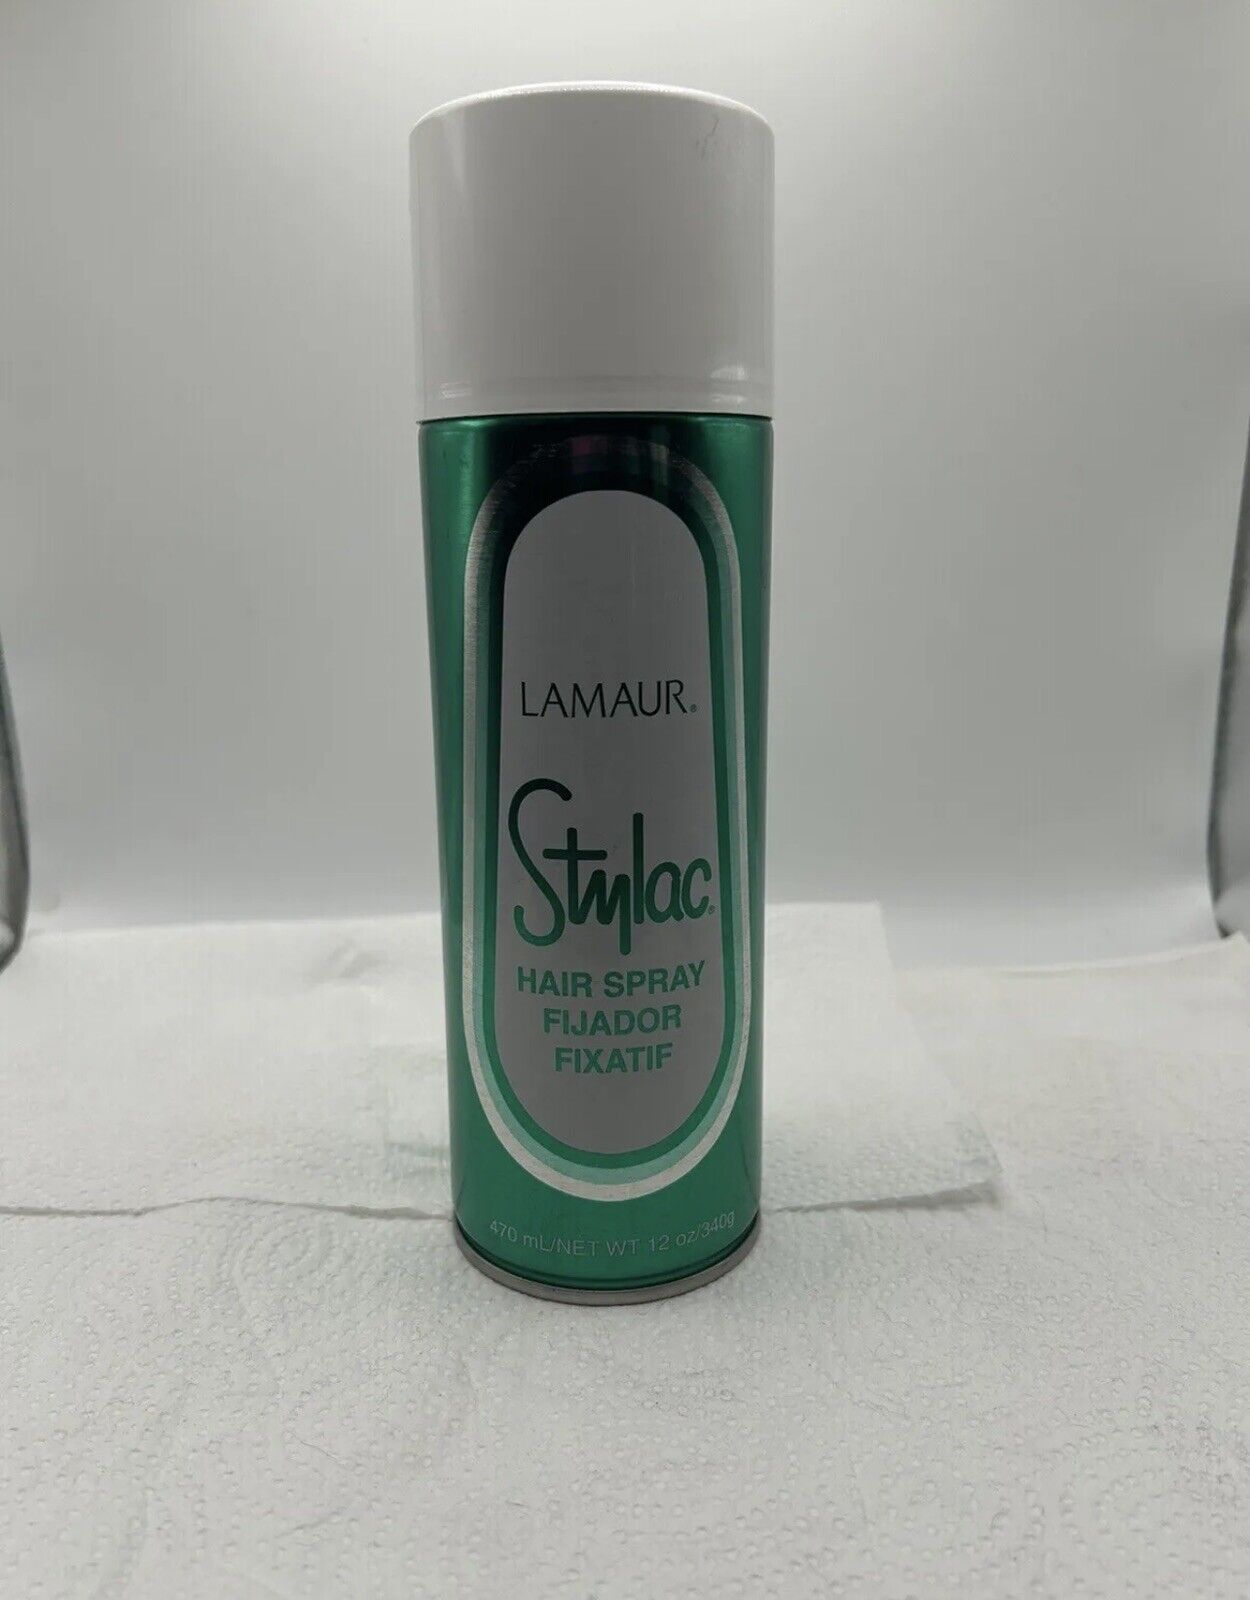 Lamaur Stylac Hair Spray 12 oz green metal can NOS Vintage